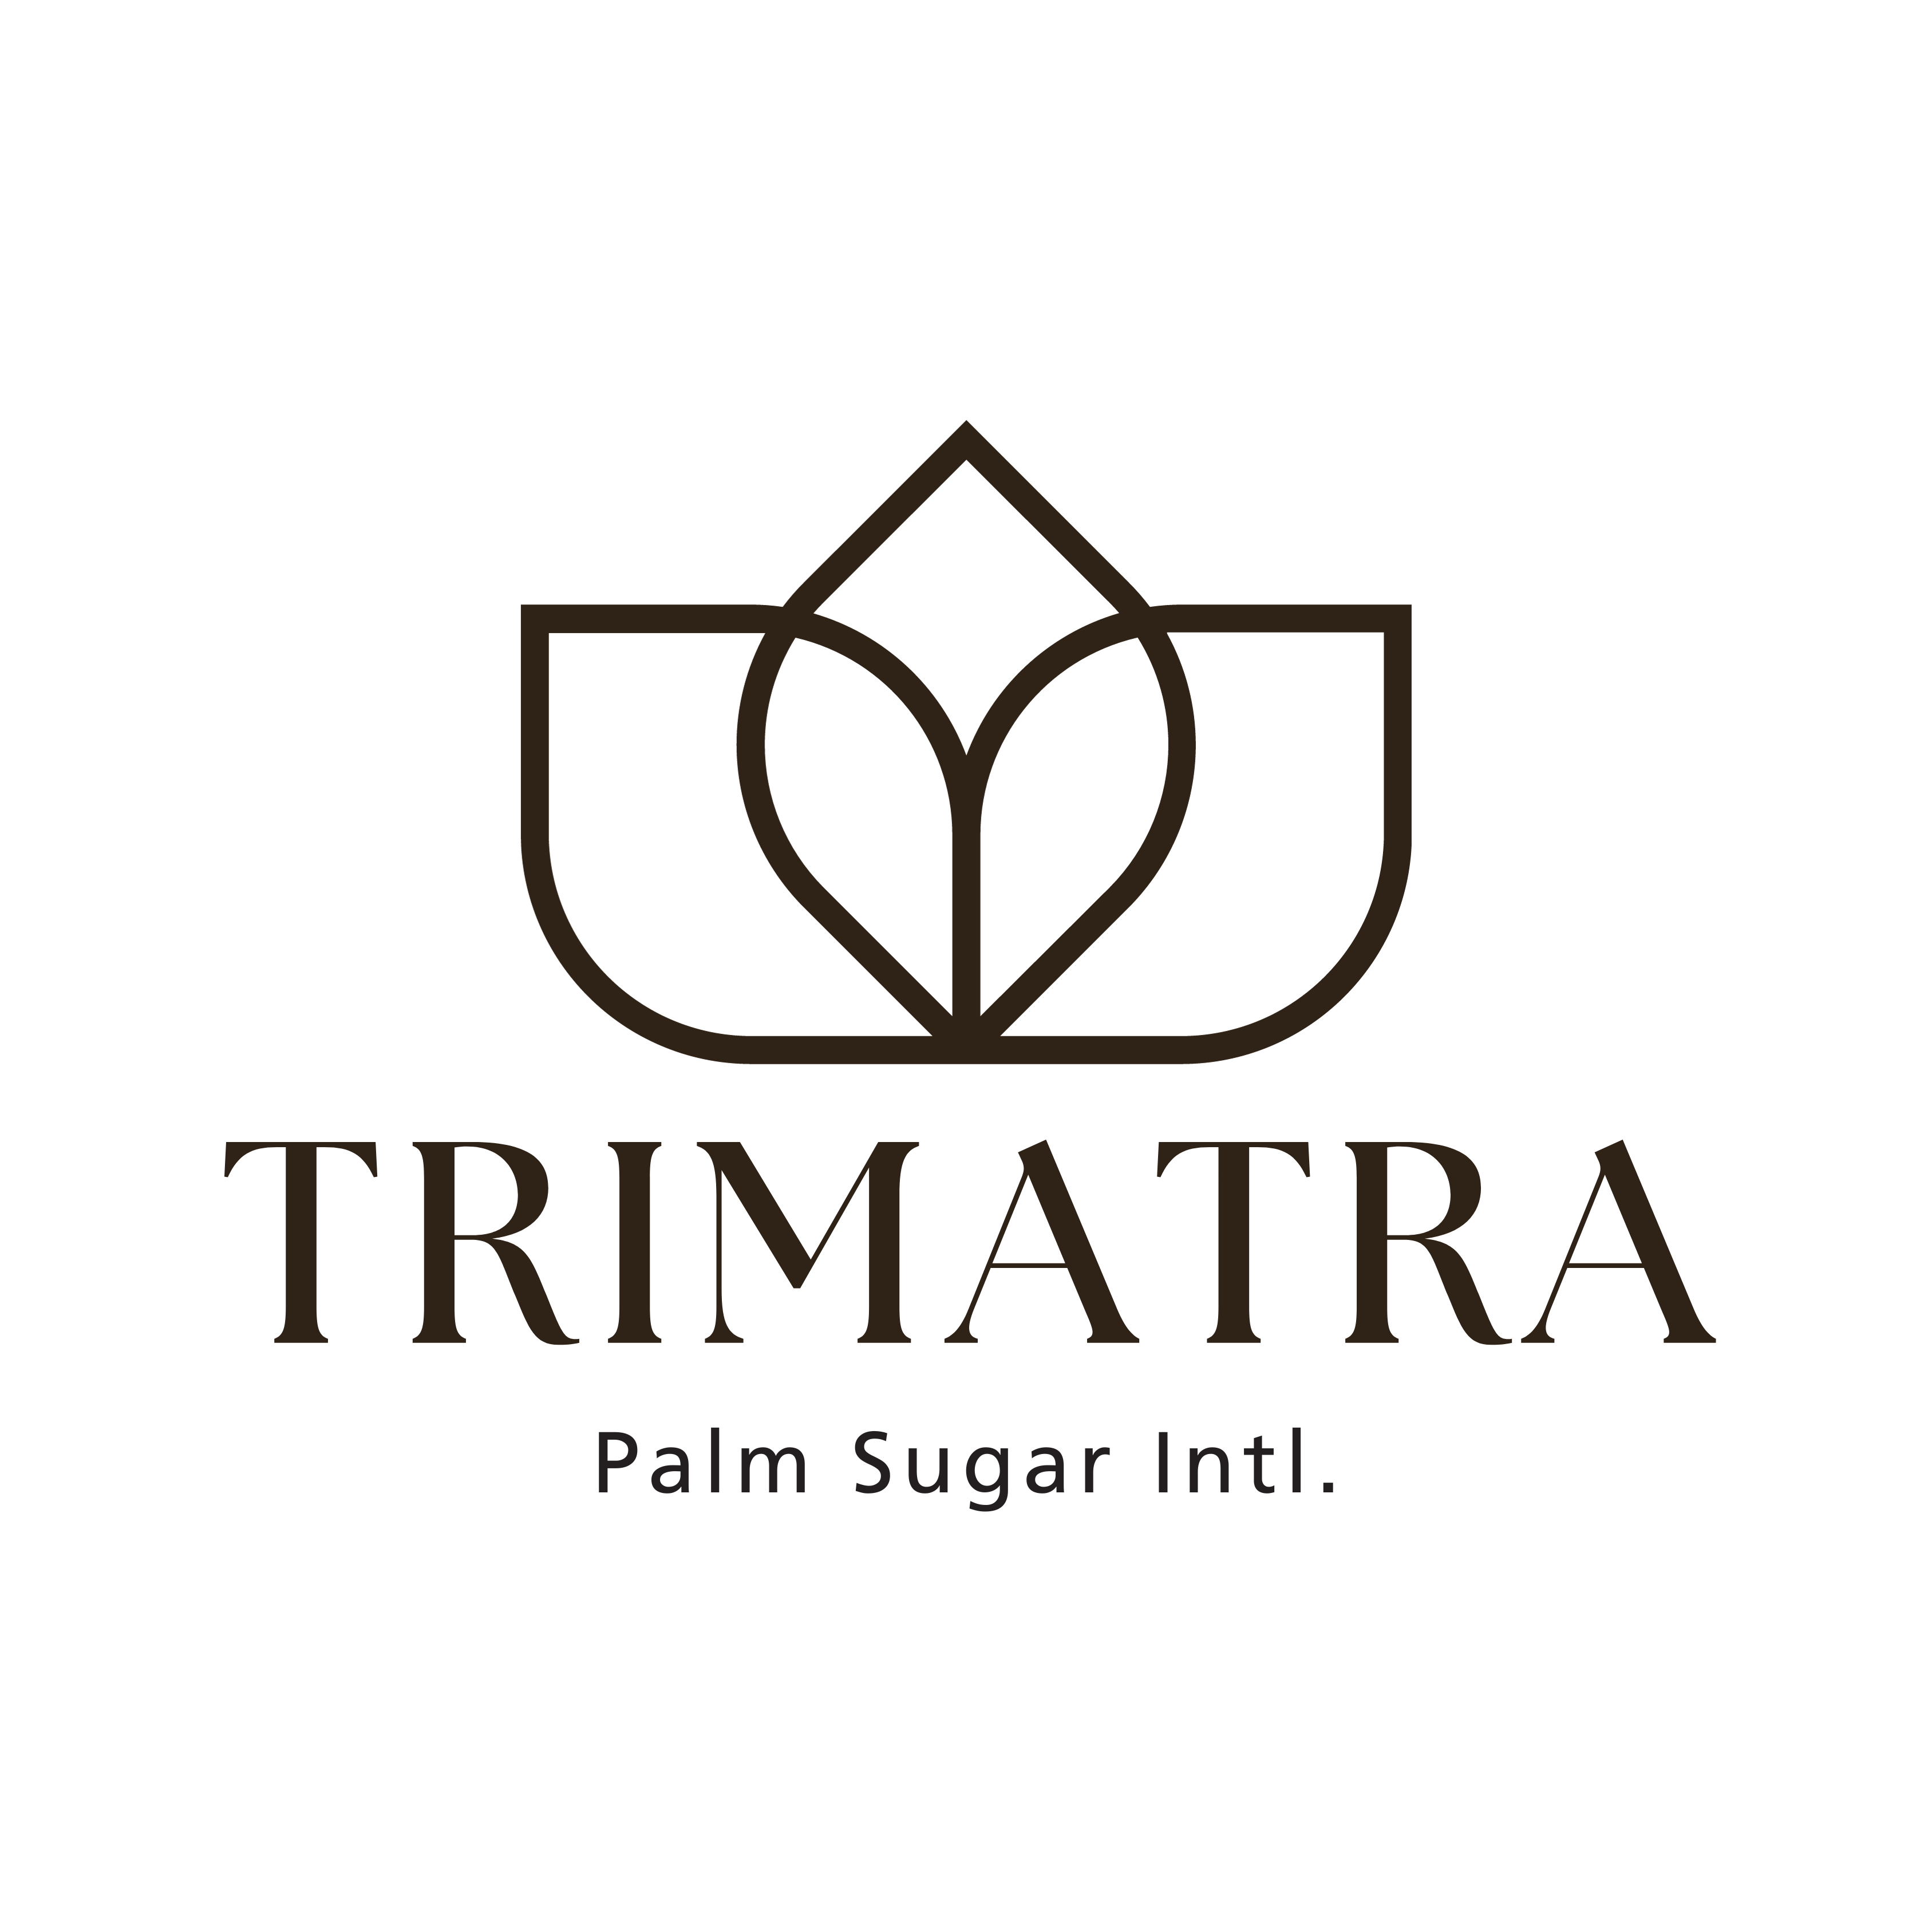 Trimatra Palm Sugar